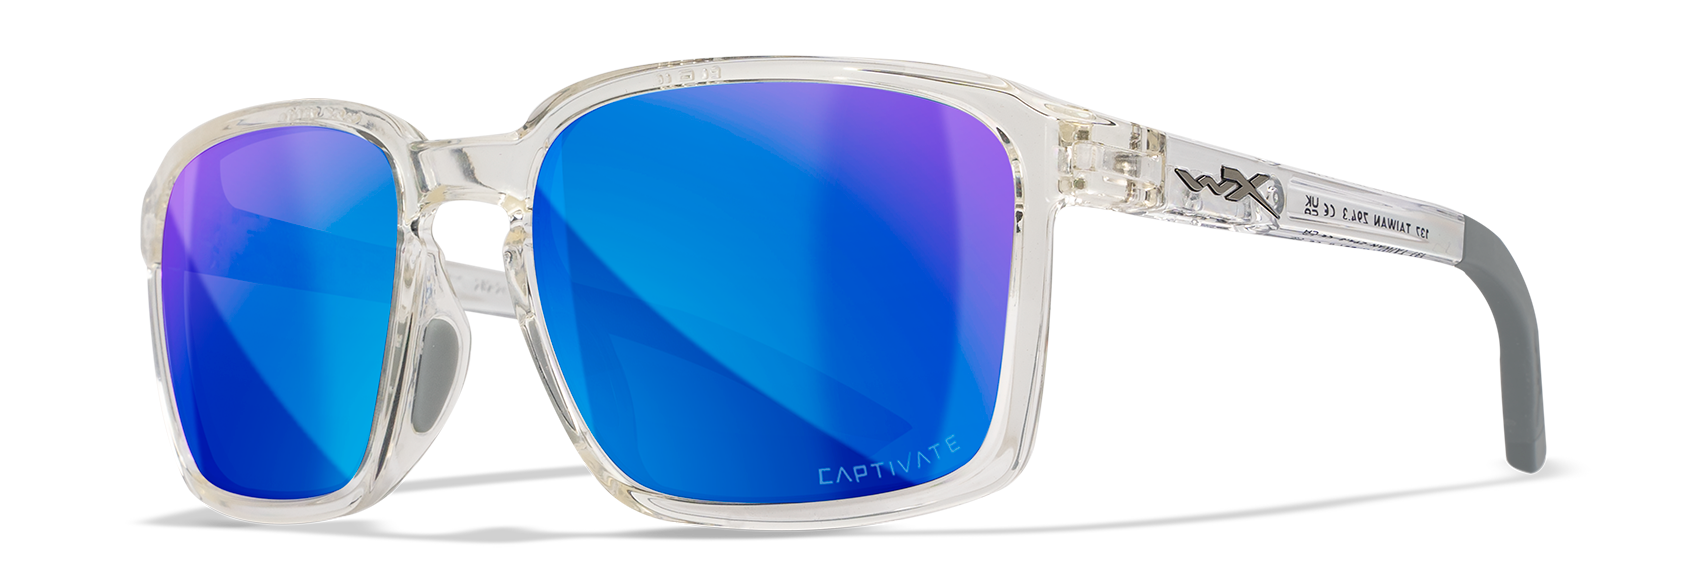 Wiley X WX ALFA Oval Sunglasses  Gloss Clear Crystal 56-18-135